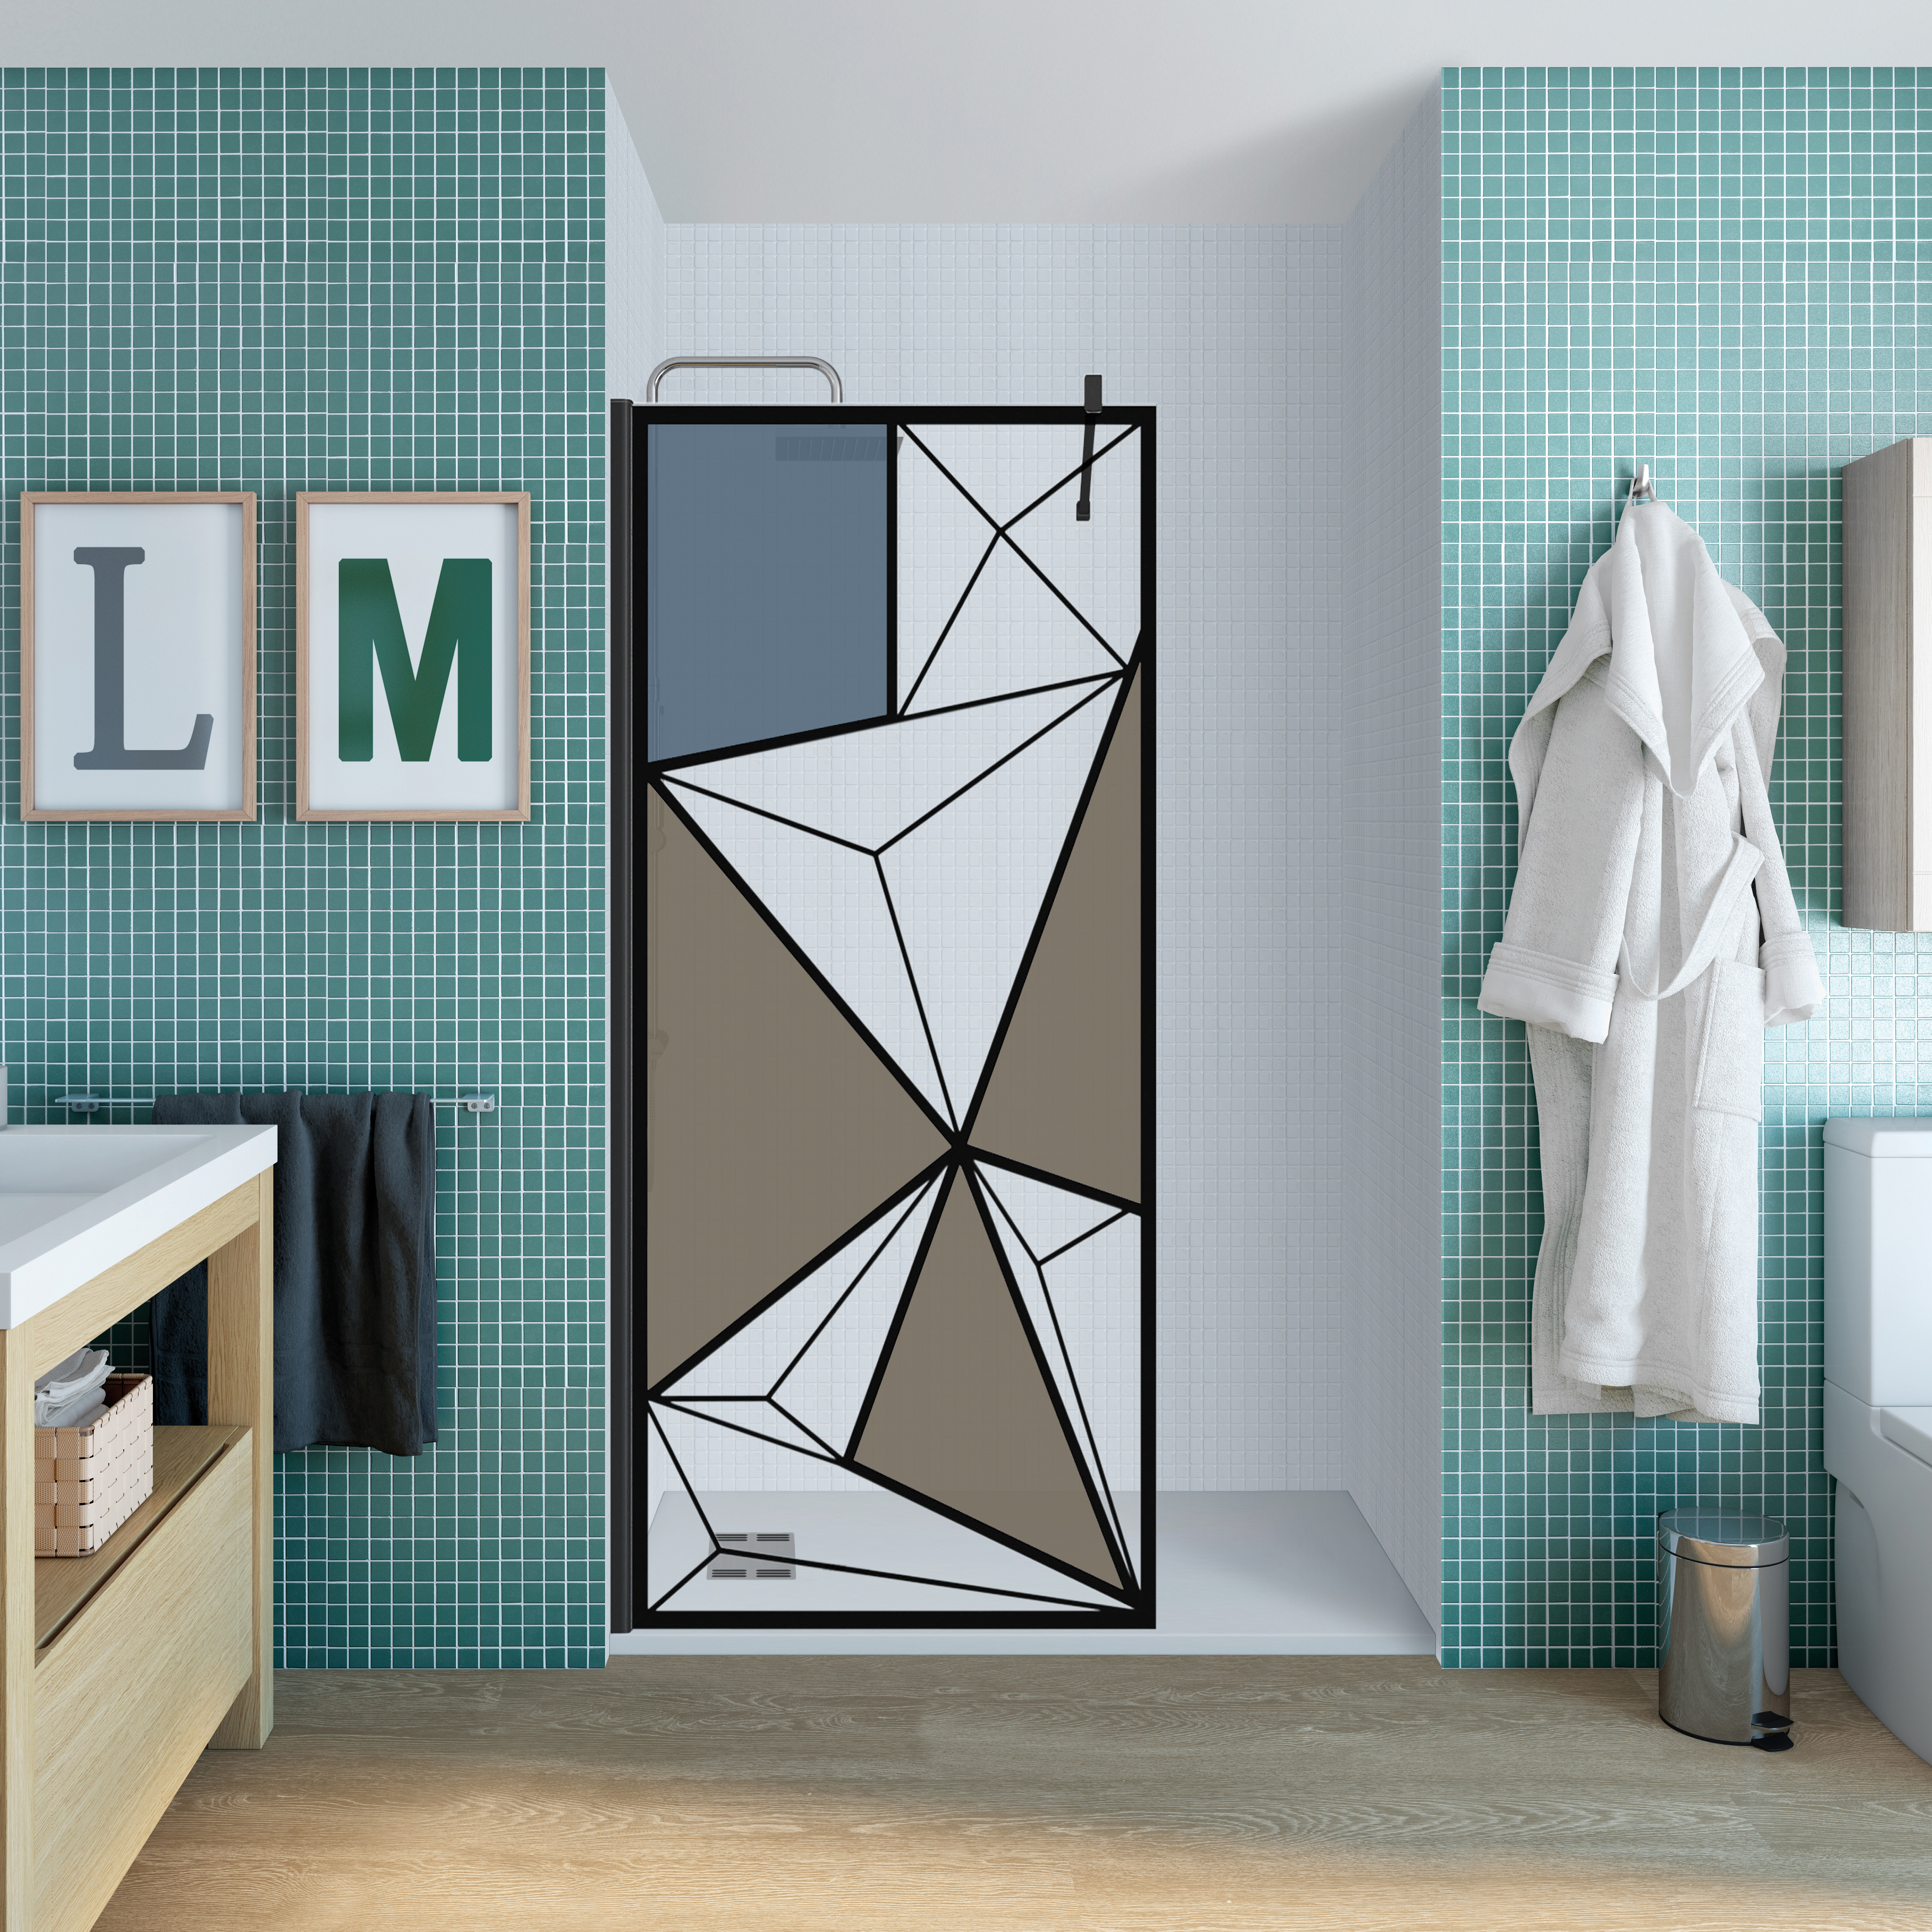 Panel de ducha cool serigrafiado perfil cromado 100x200cm